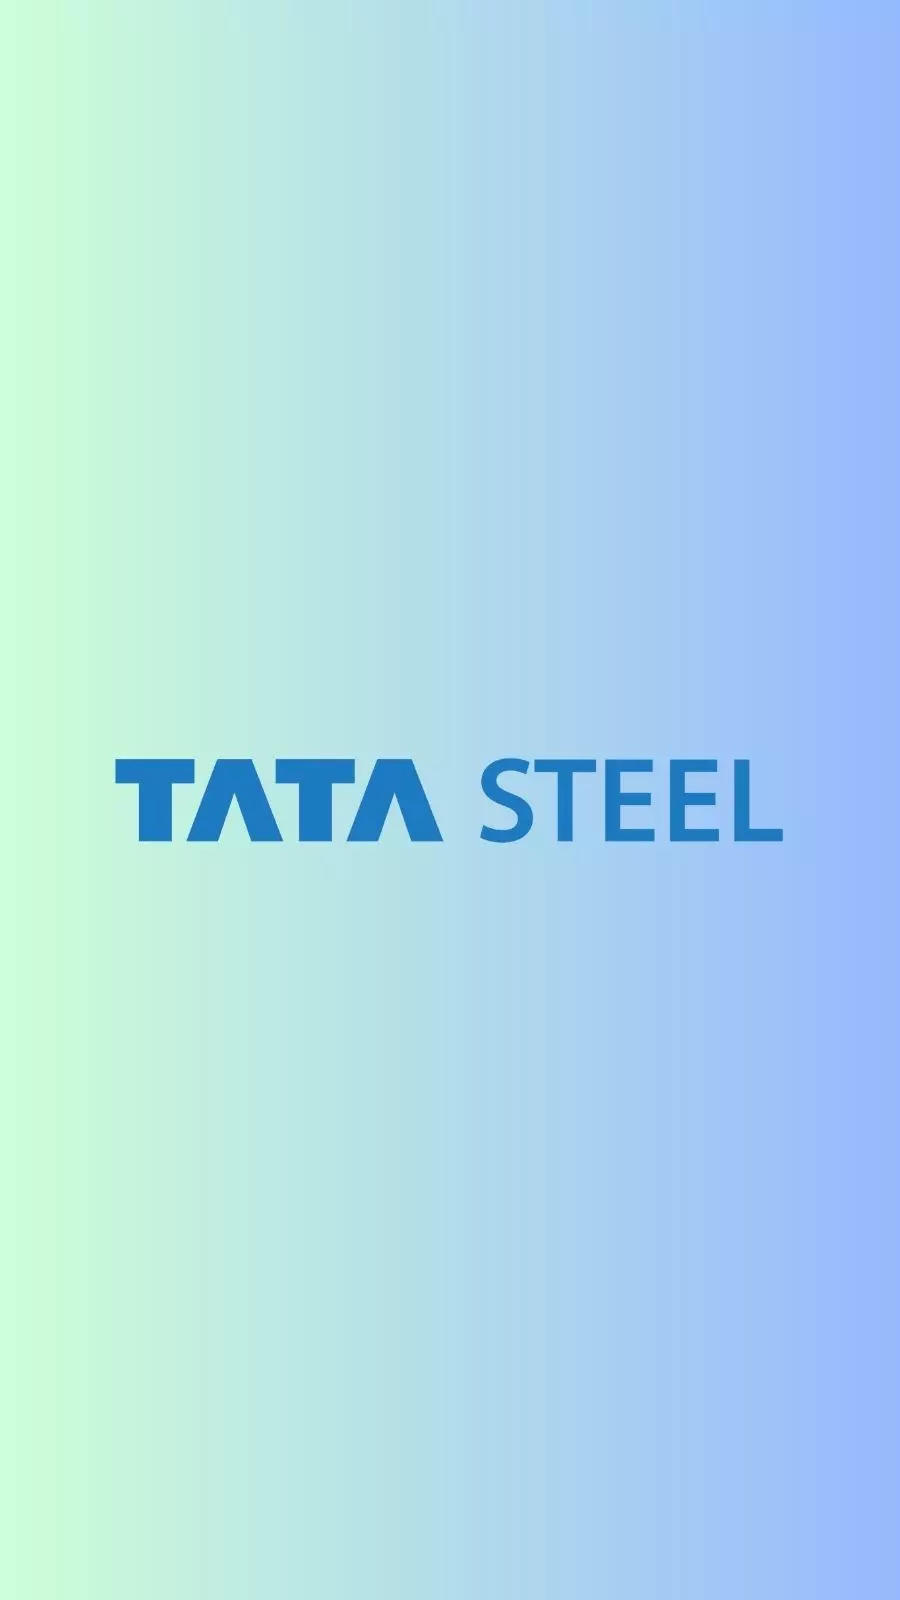 tata steel vector logo